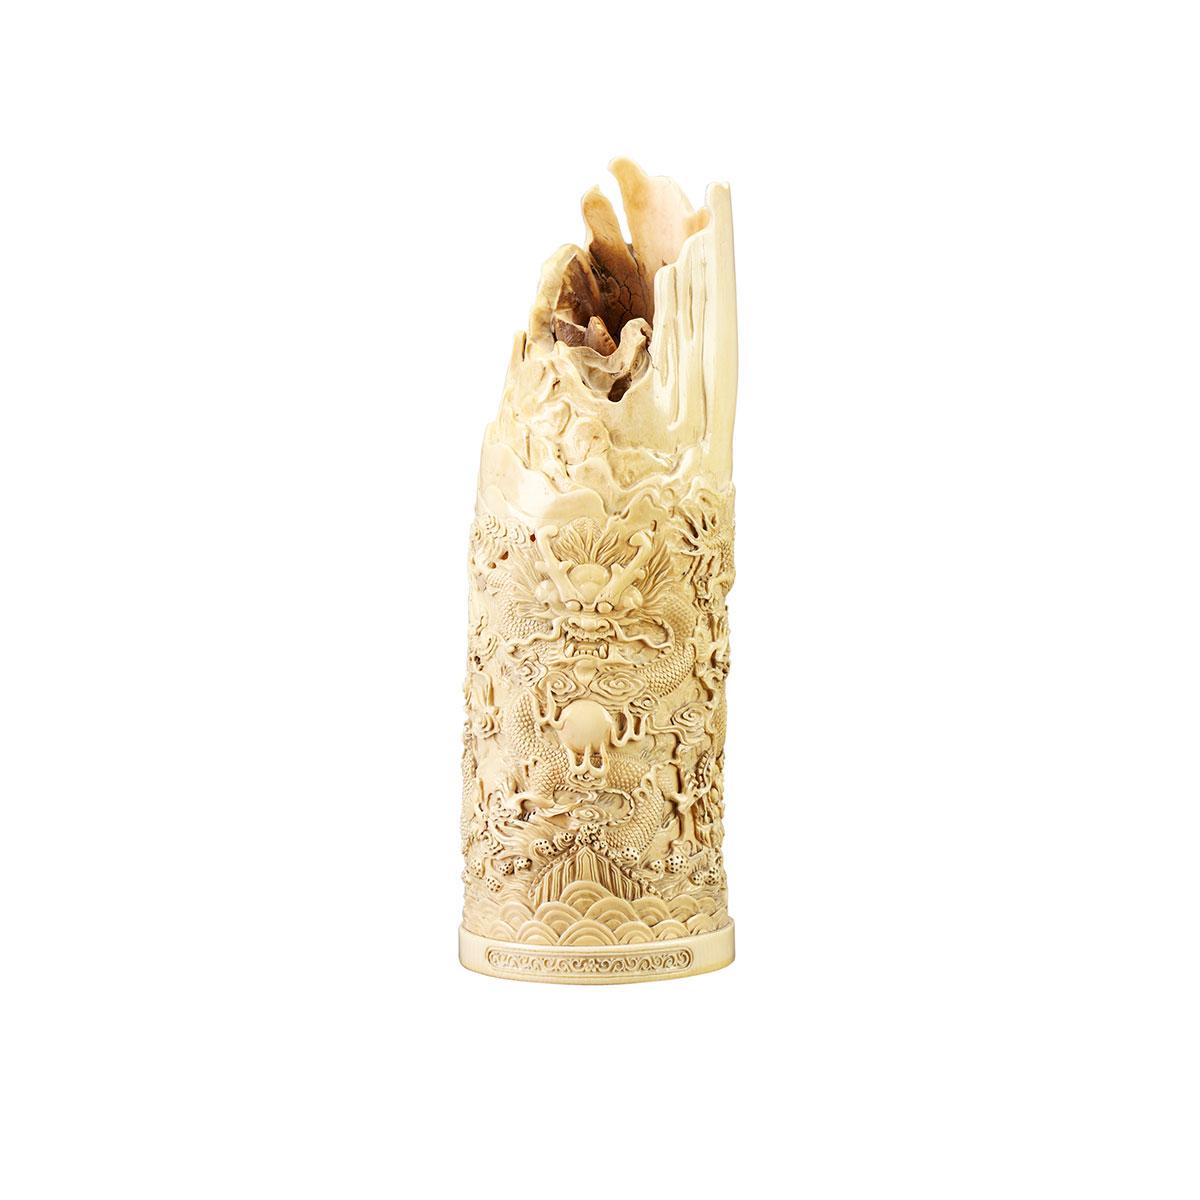 Ivory Tusk-Form Dragon Vase